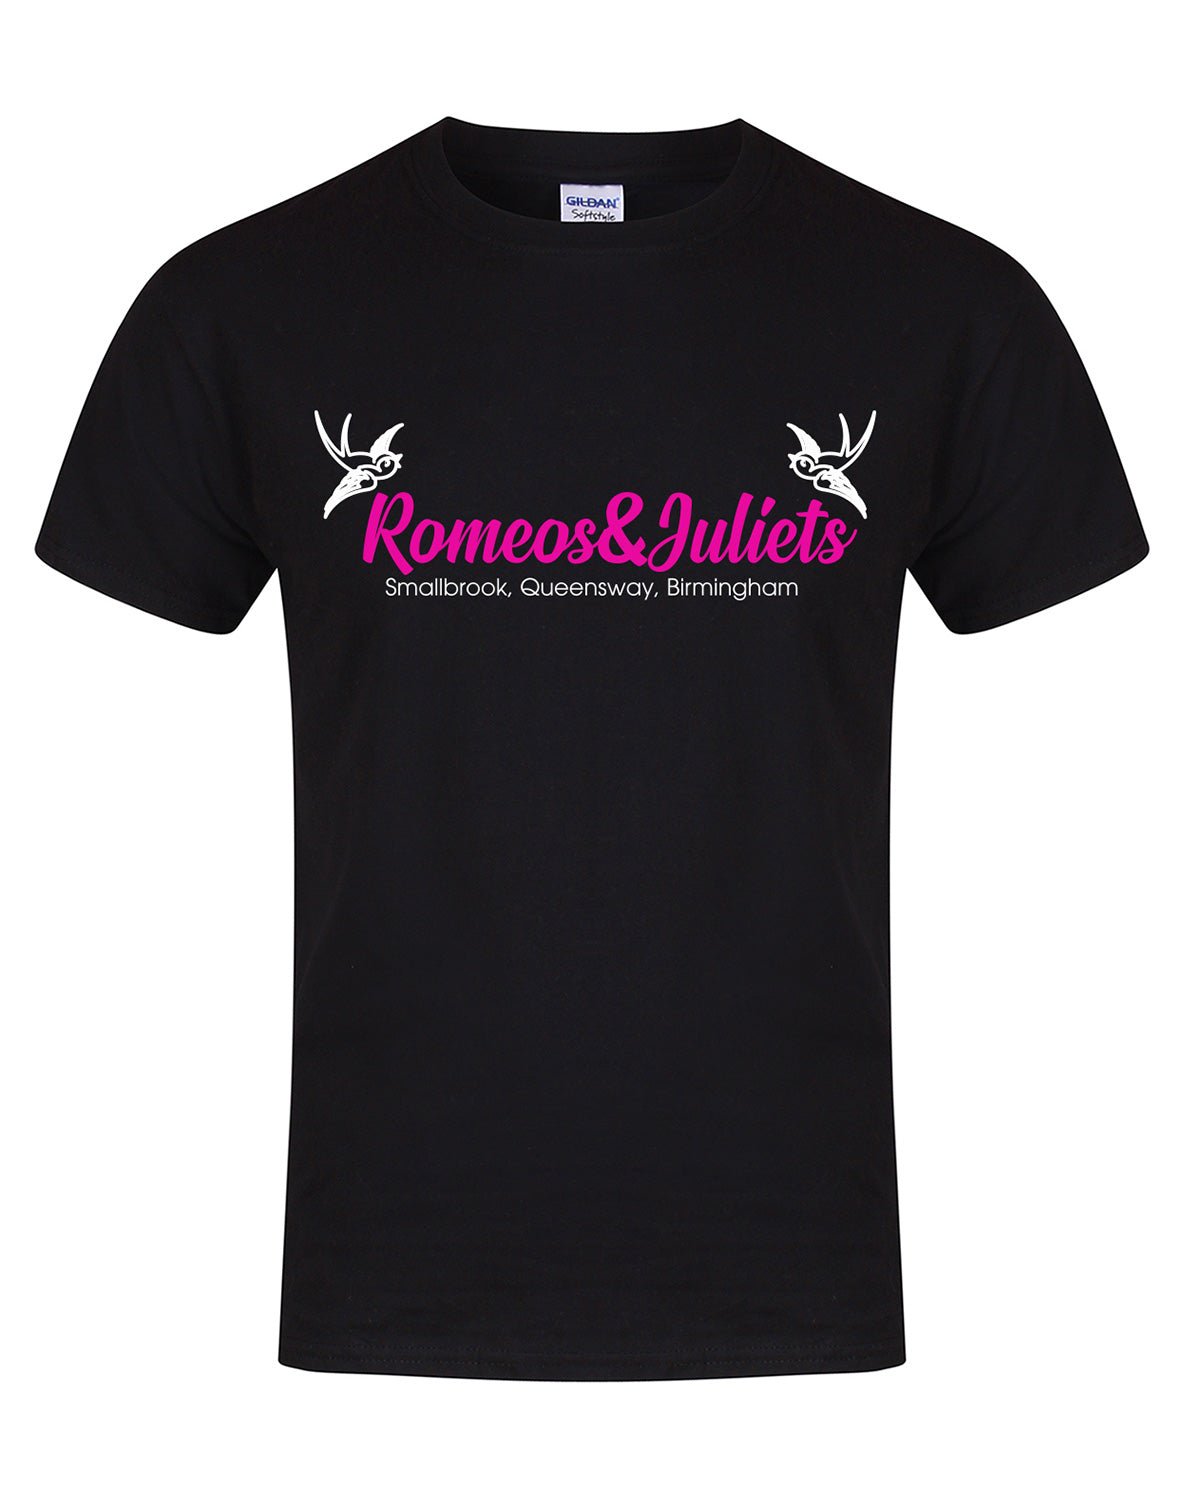 Romeo & Juliets - Birmingham - unisex fit T-shirt - various colours - Dirty Stop Outs